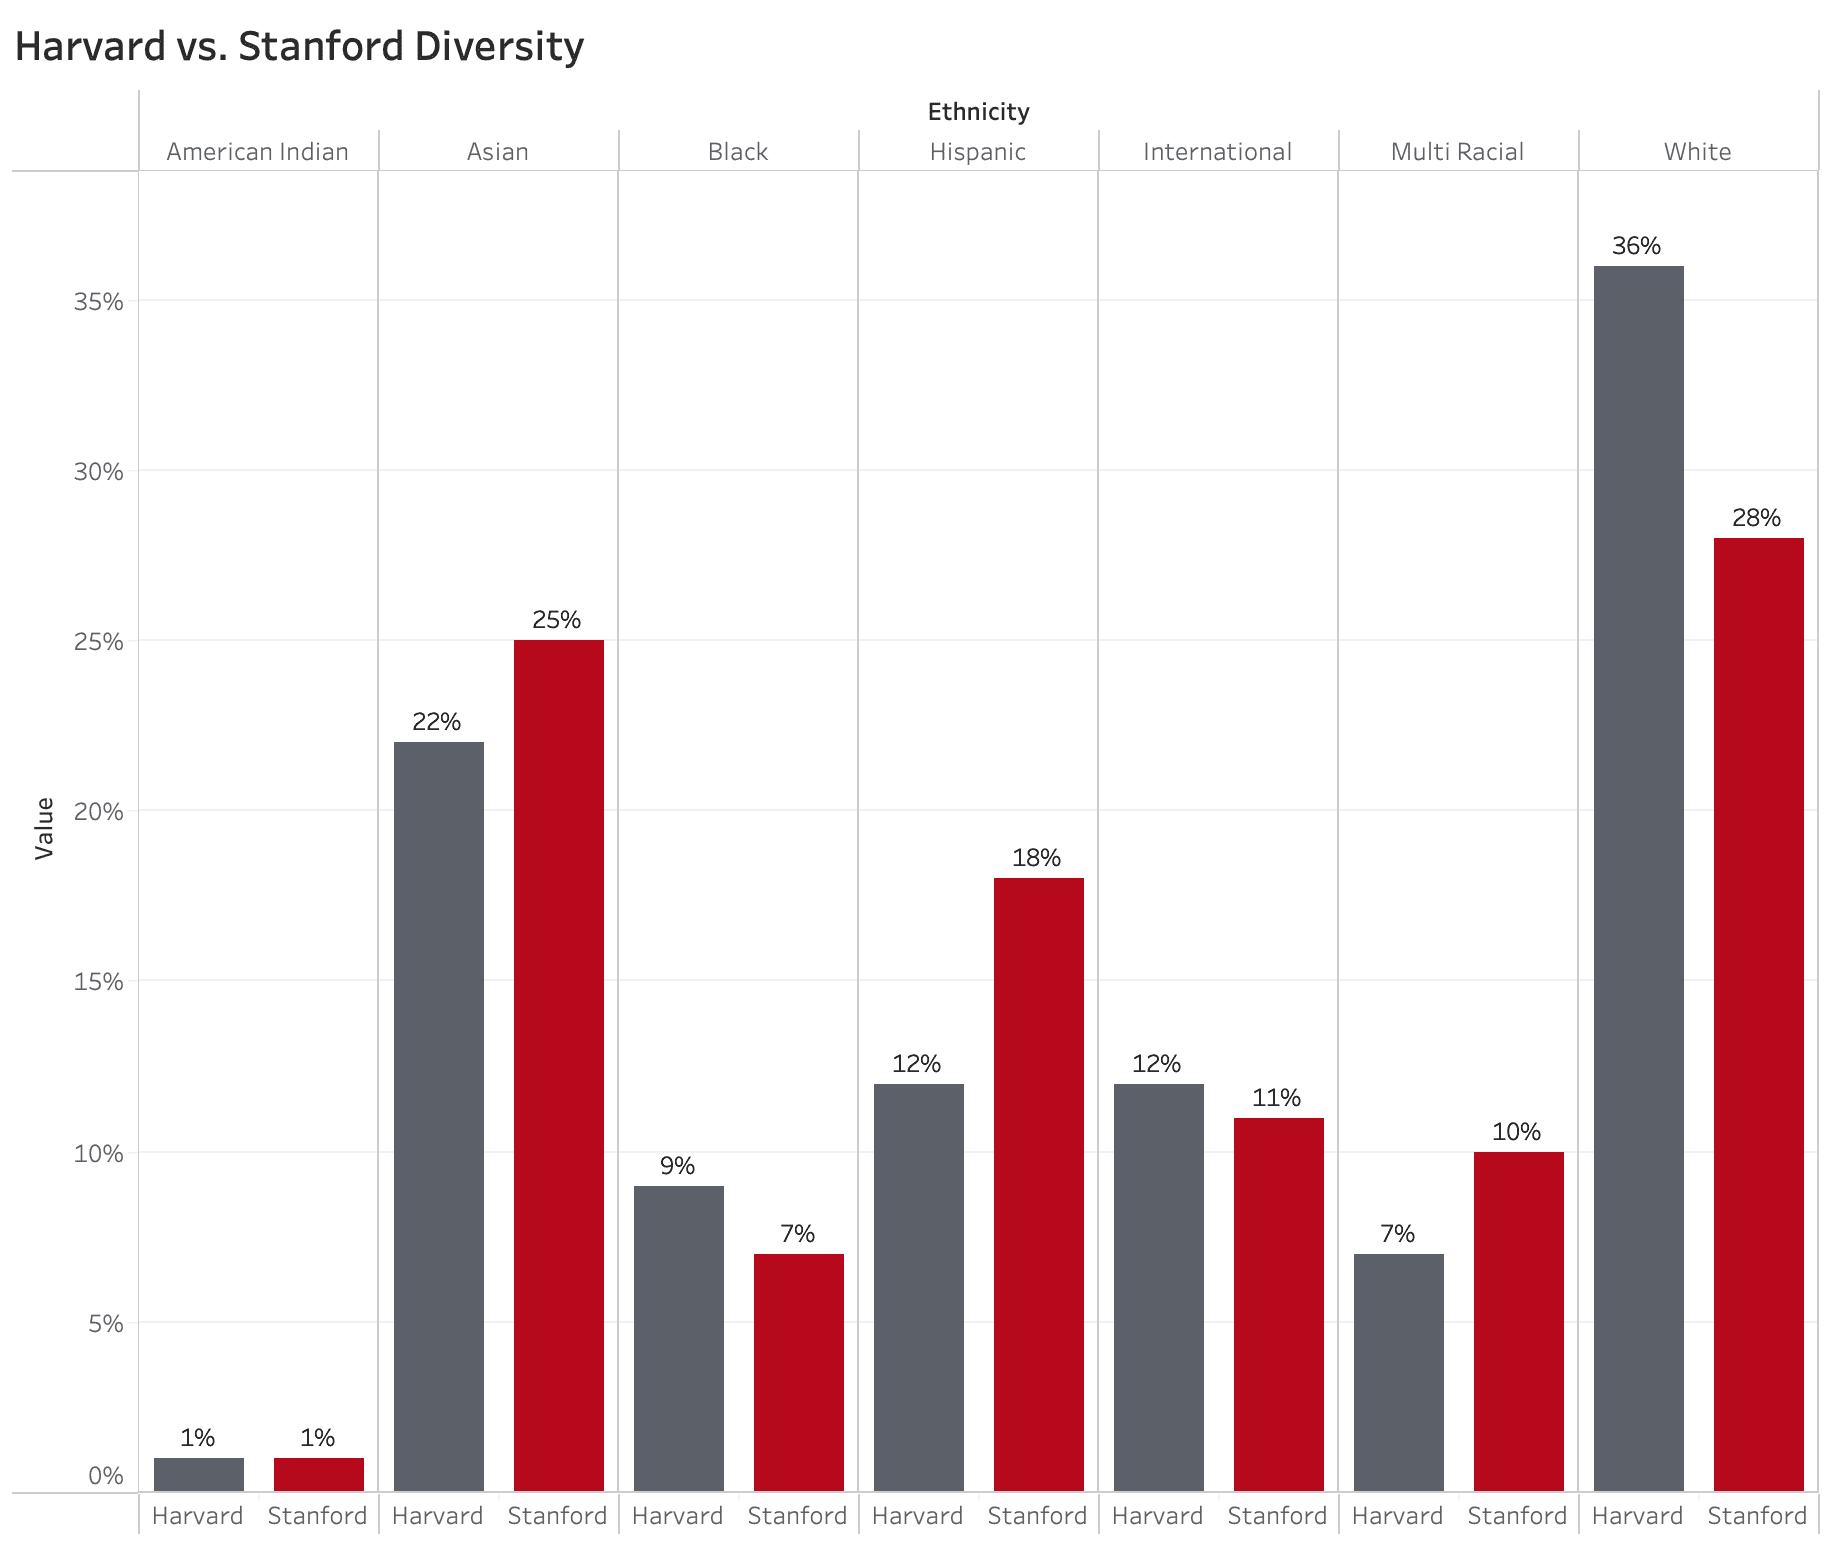 Stanford vs. Harvard diversity statistics